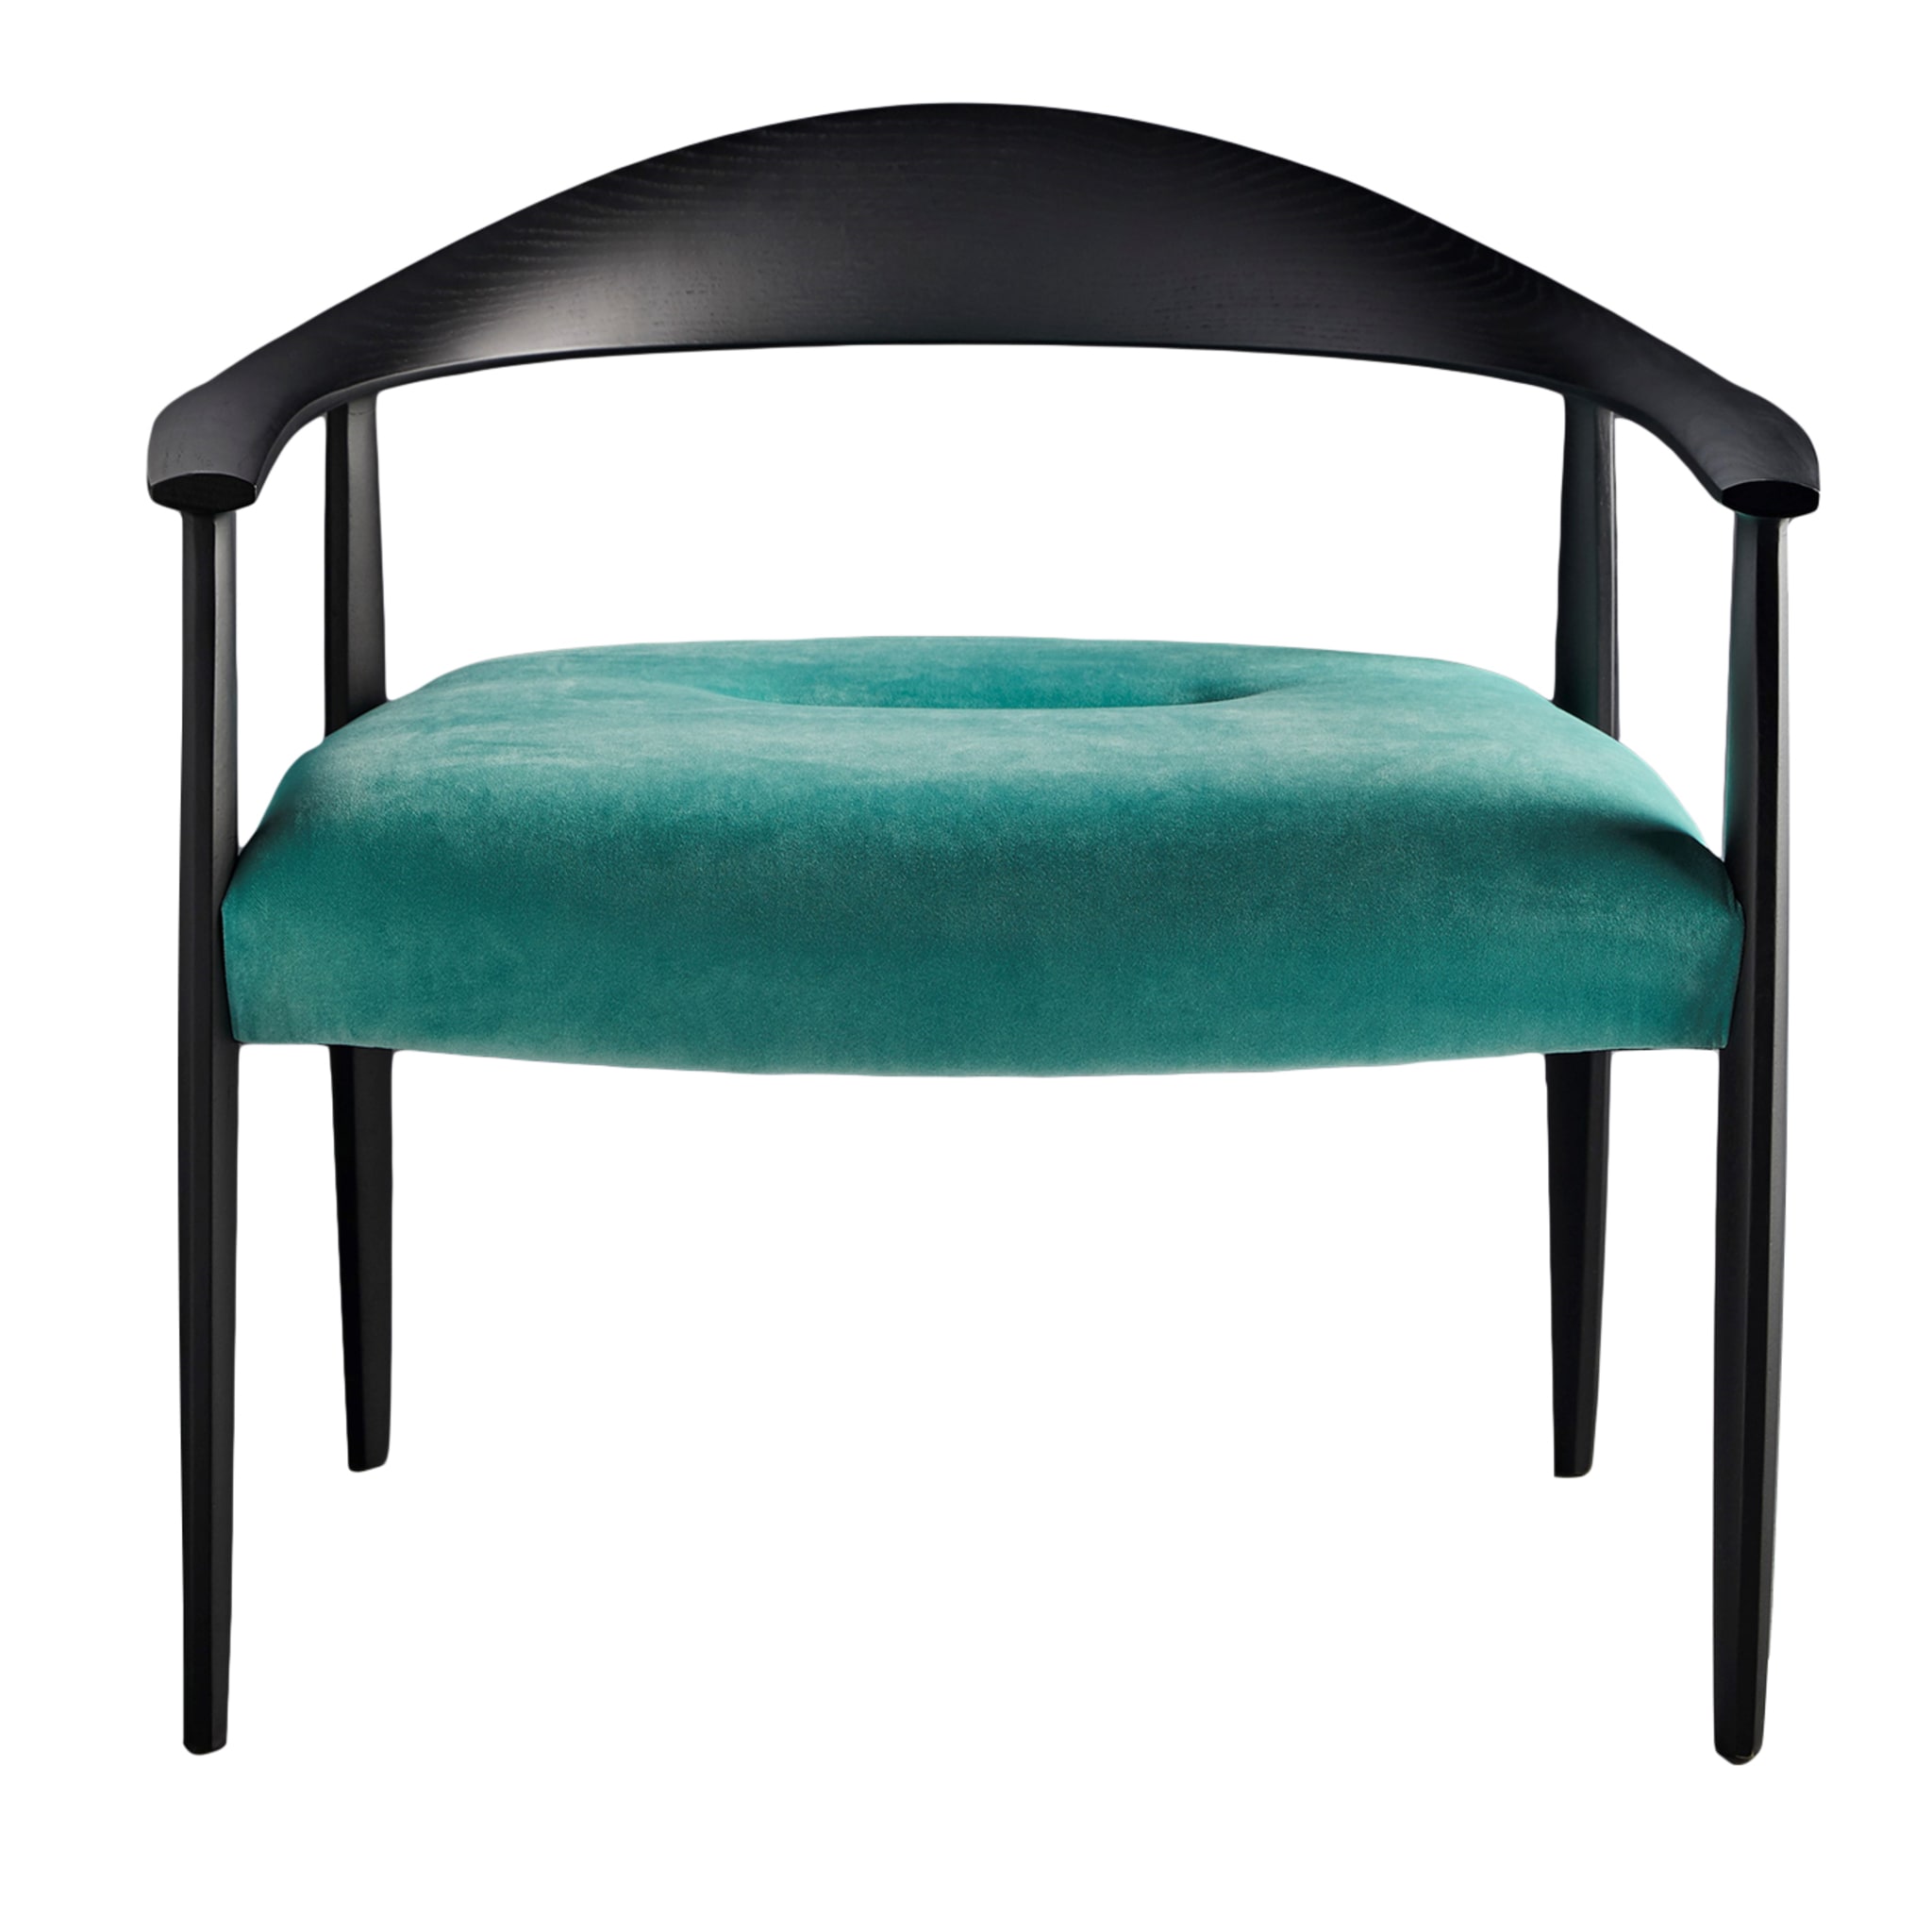 Odyssée.xl Black & Turquoise Low Armchair by P. Borgonovo - Main view